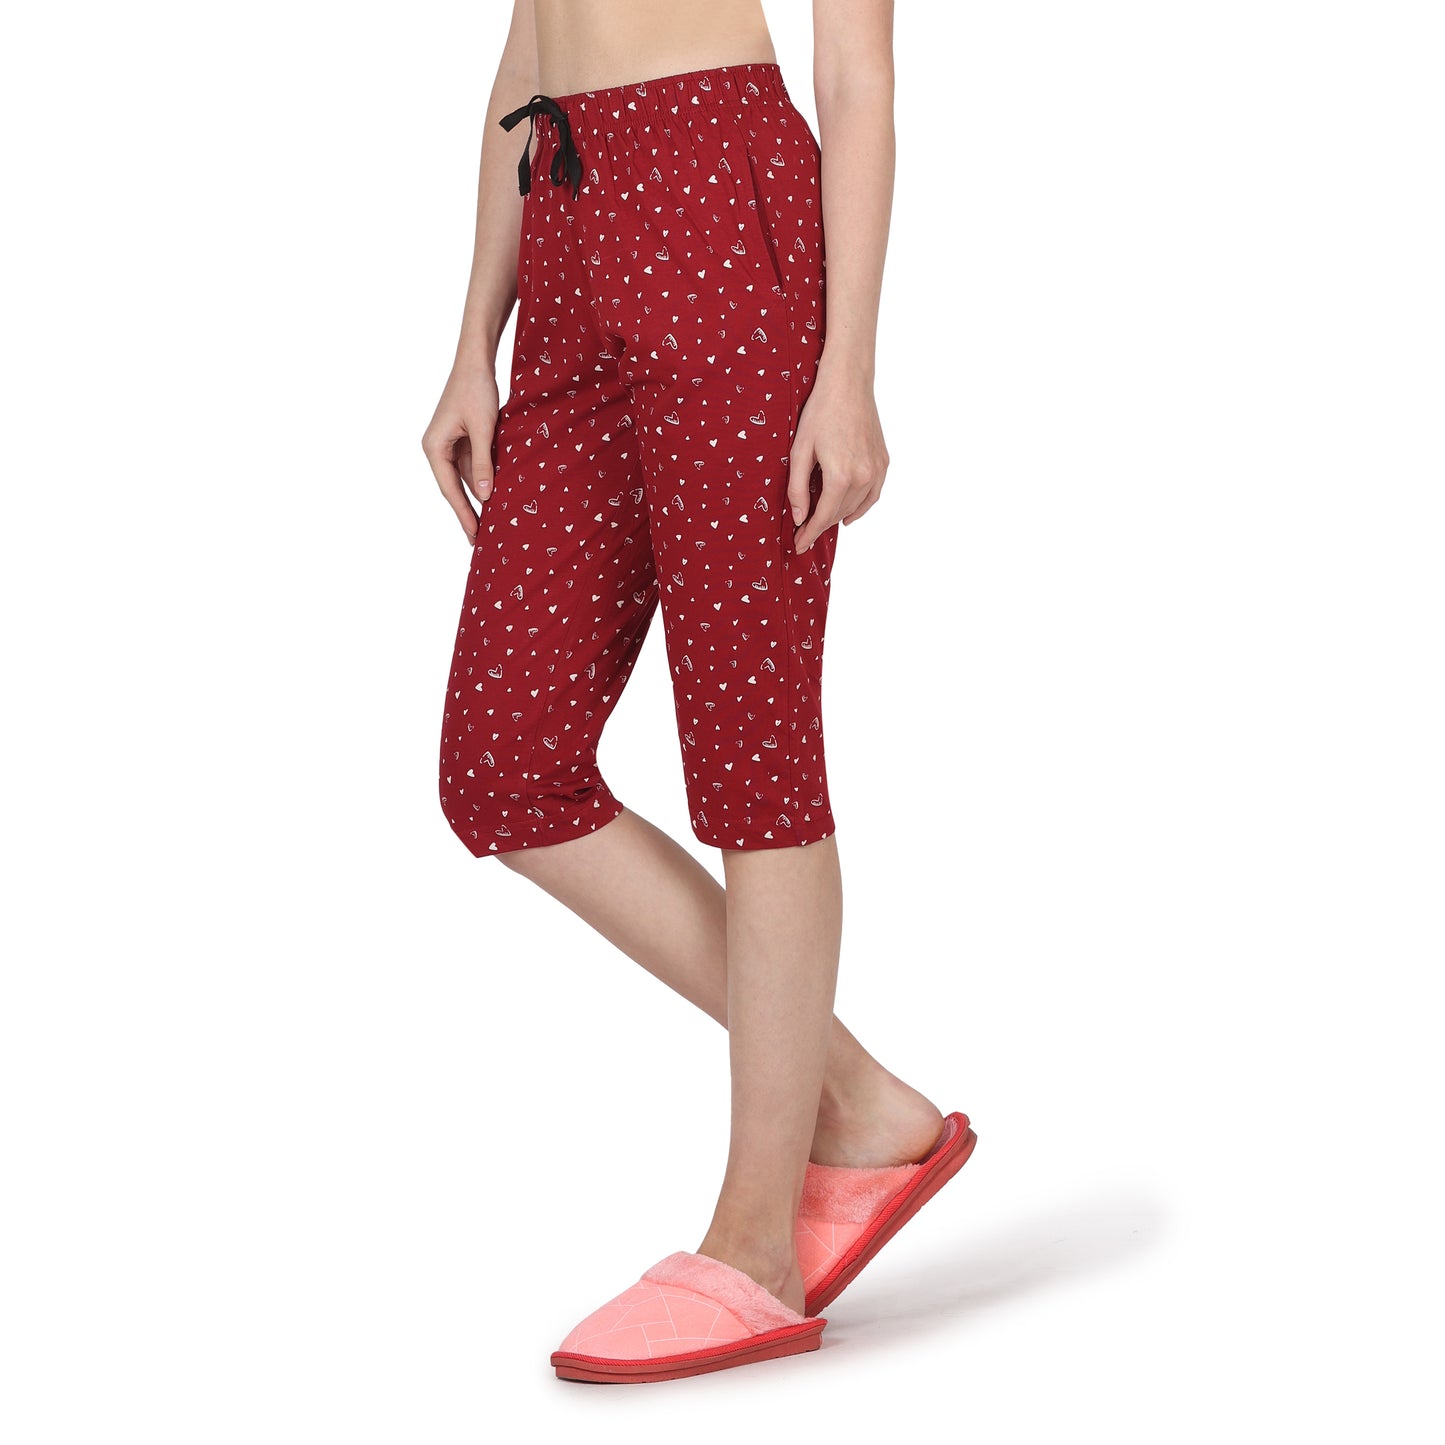 Eazy Women's Printed Capri Pants- Pack of 4 - Black, Blush, Cherry Red & Navy Blue